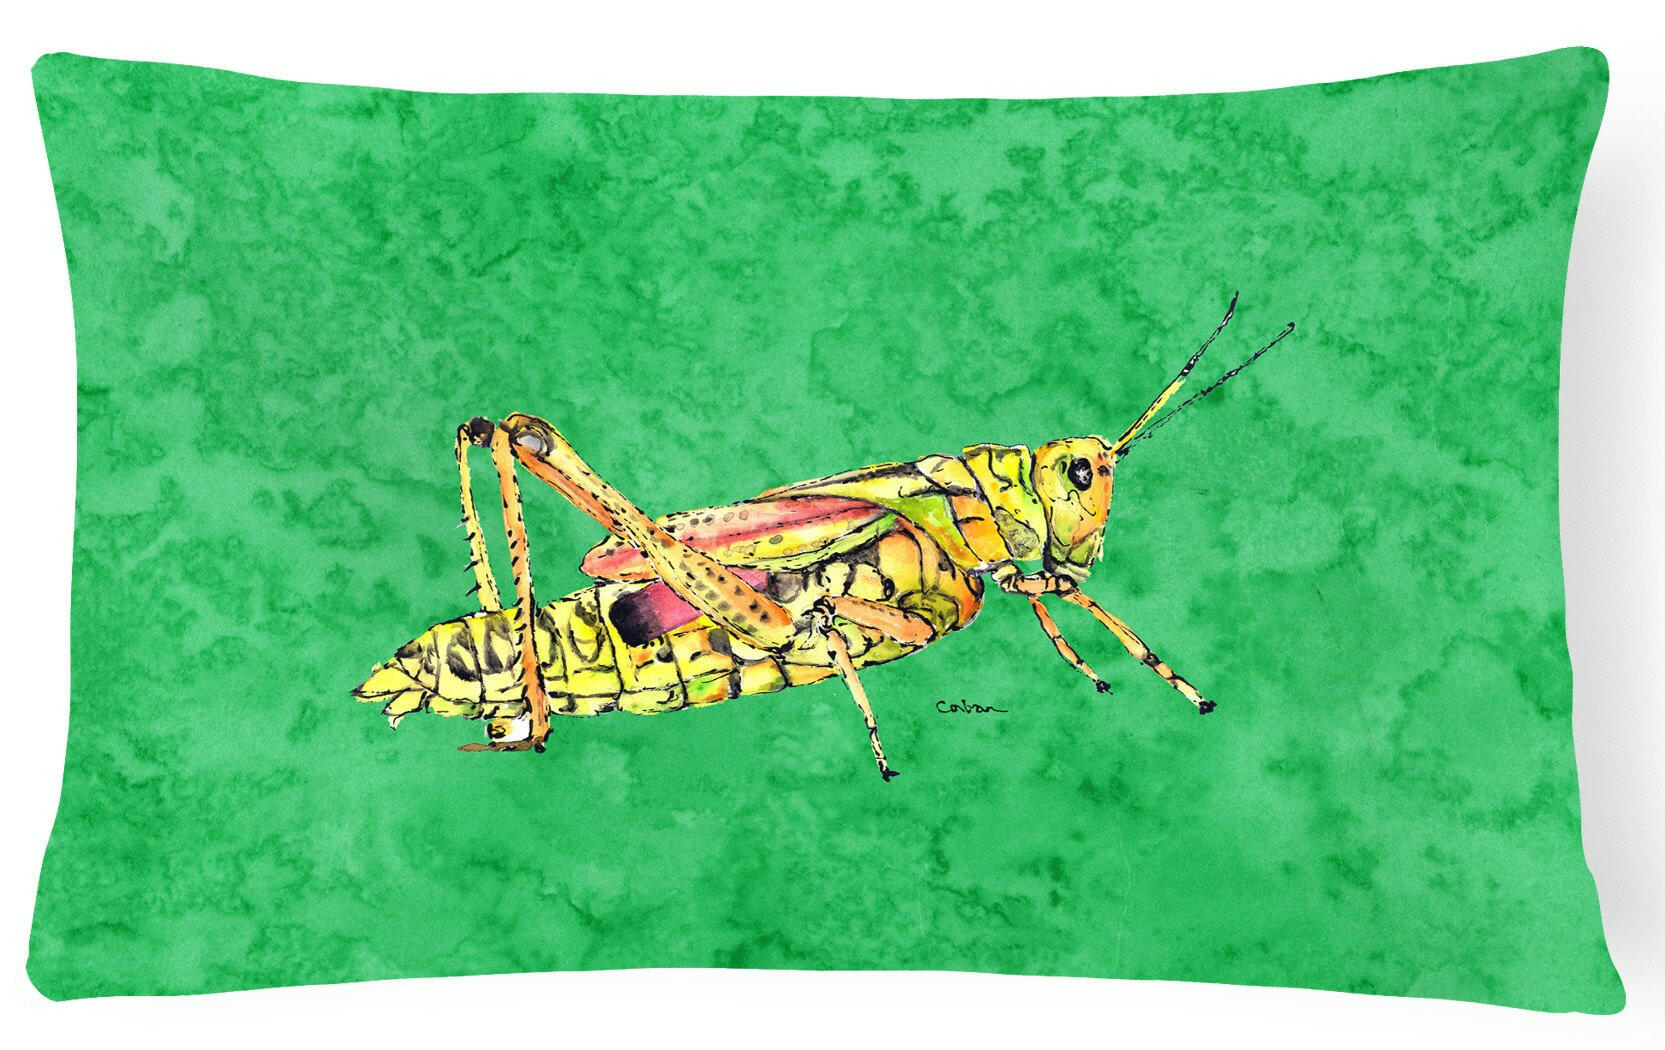 Grasshopper on Green   Canvas Fabric Decorative Pillow by Caroline's Treasures